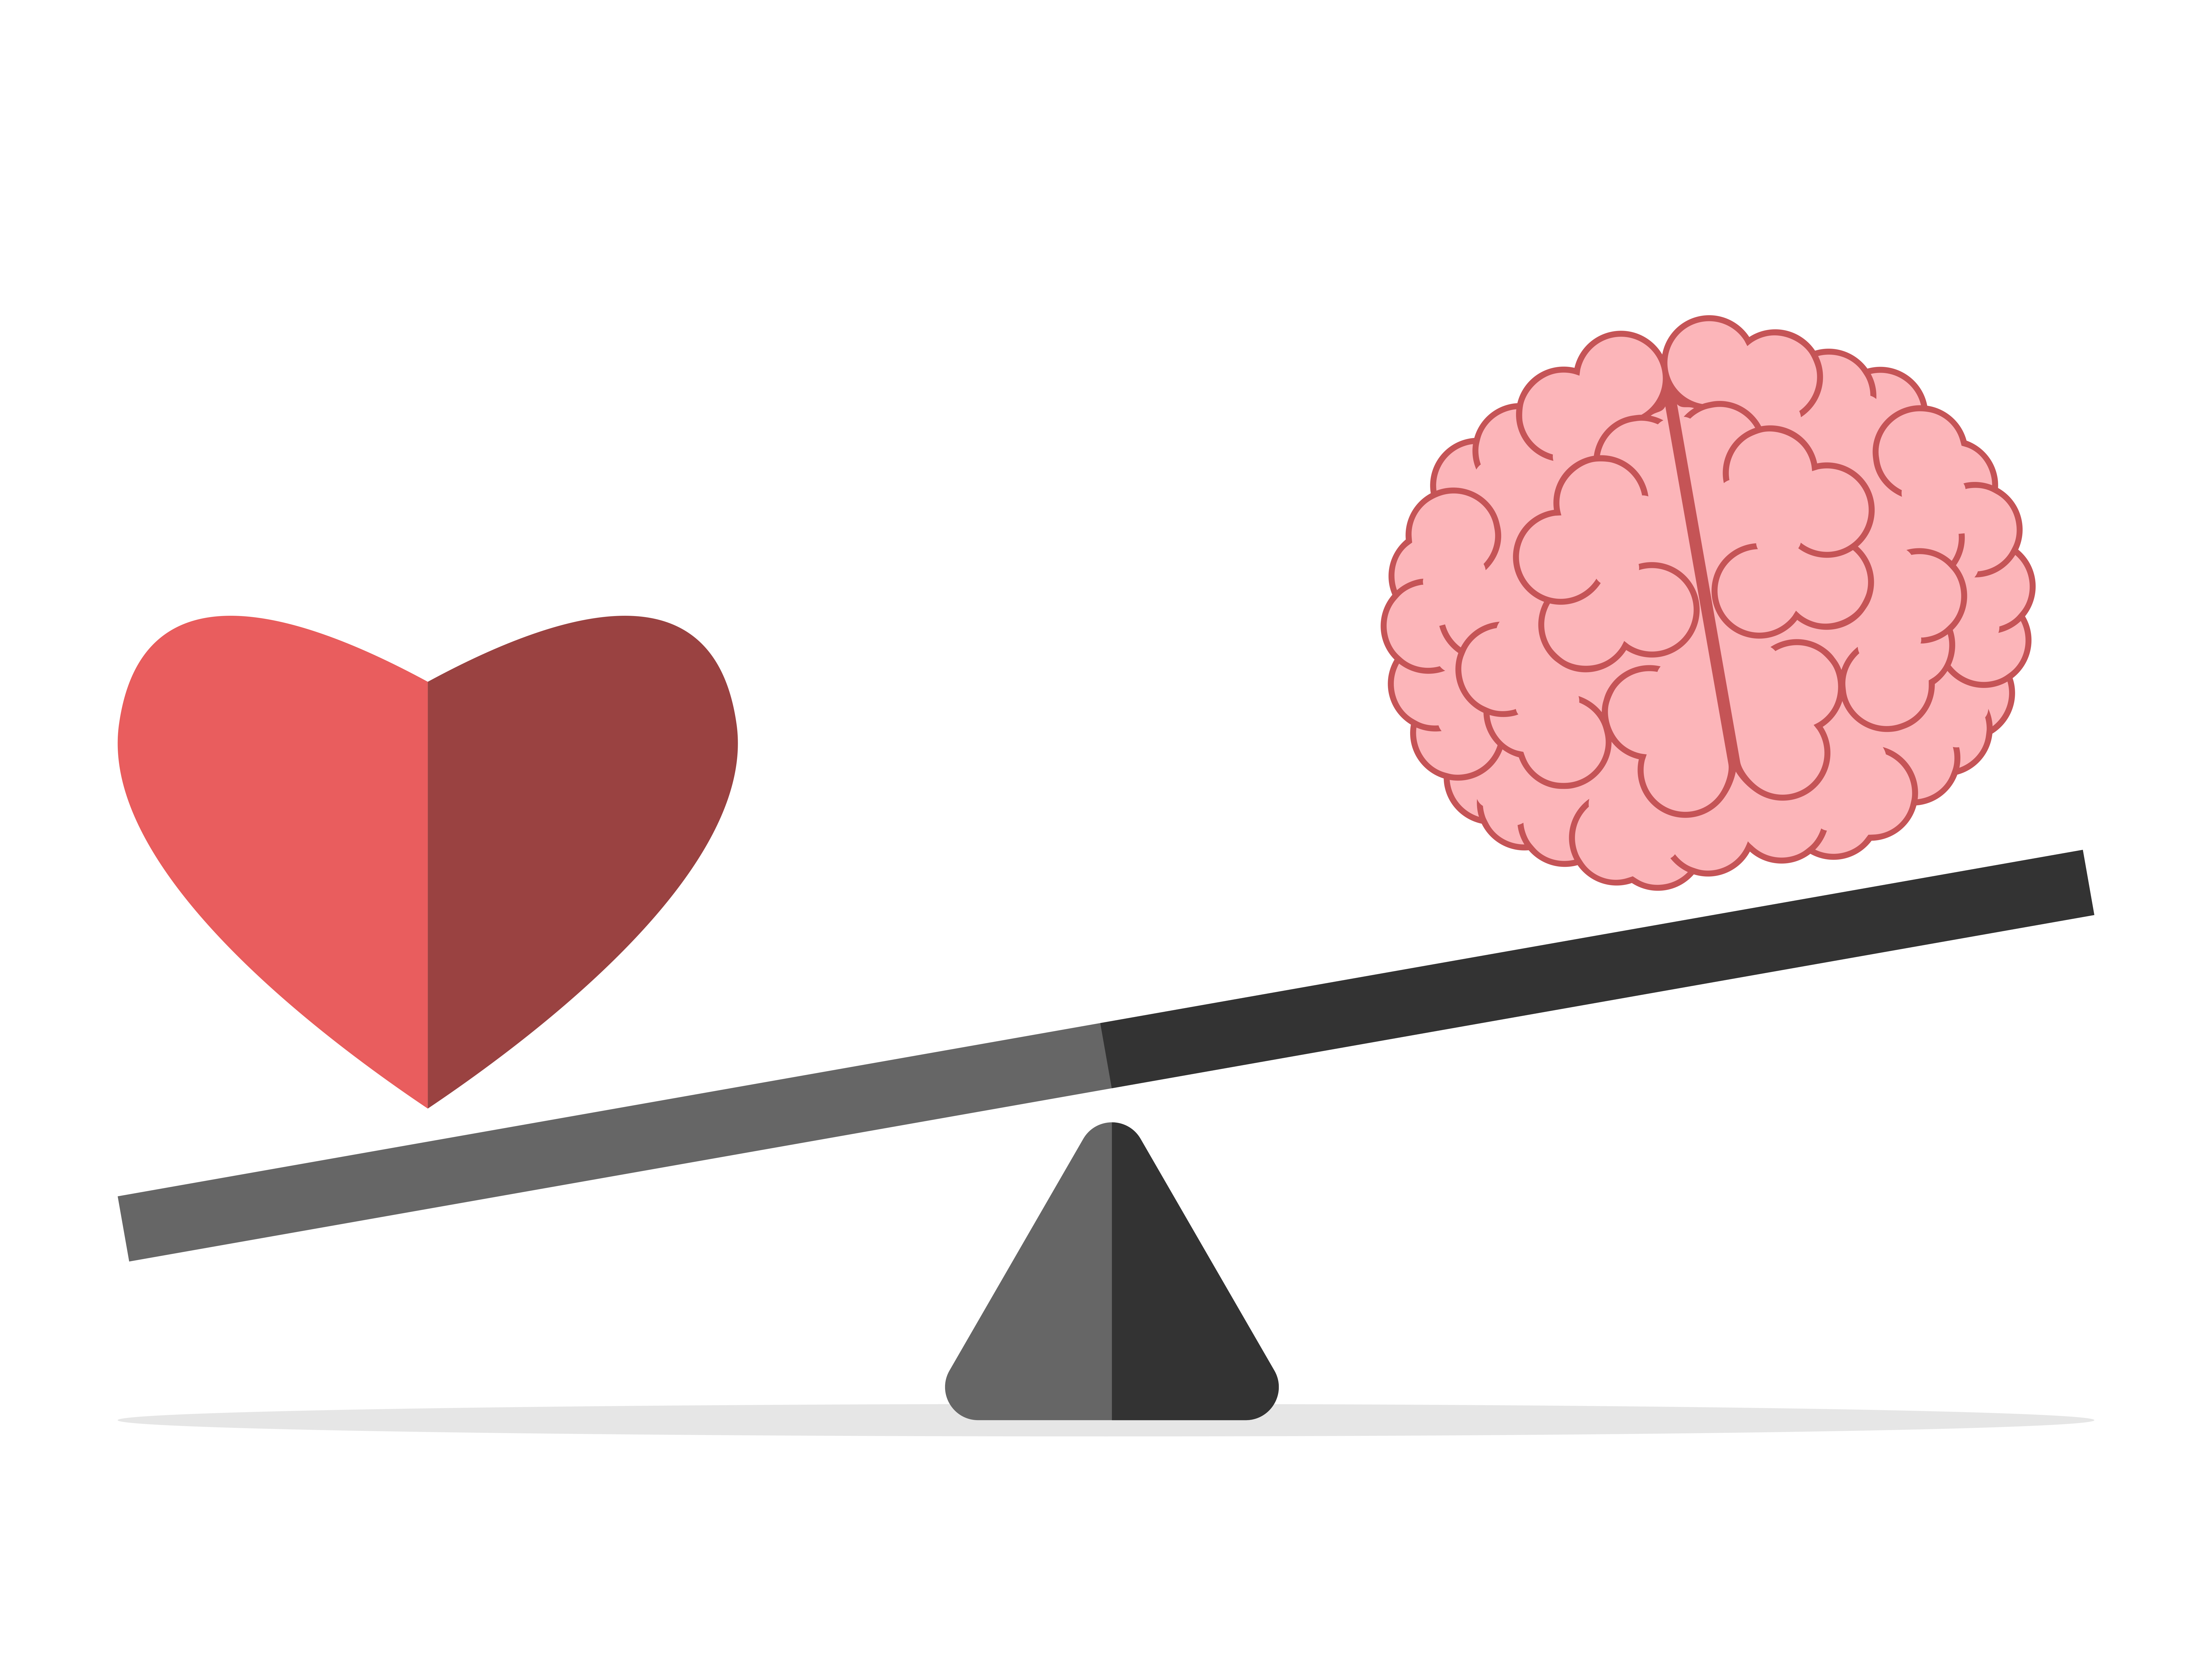 Heart and brain. Мозг и сердце. Сердце и мозг на весах. Равновесие ума и сердца. Баланс между сердцем и разумом.